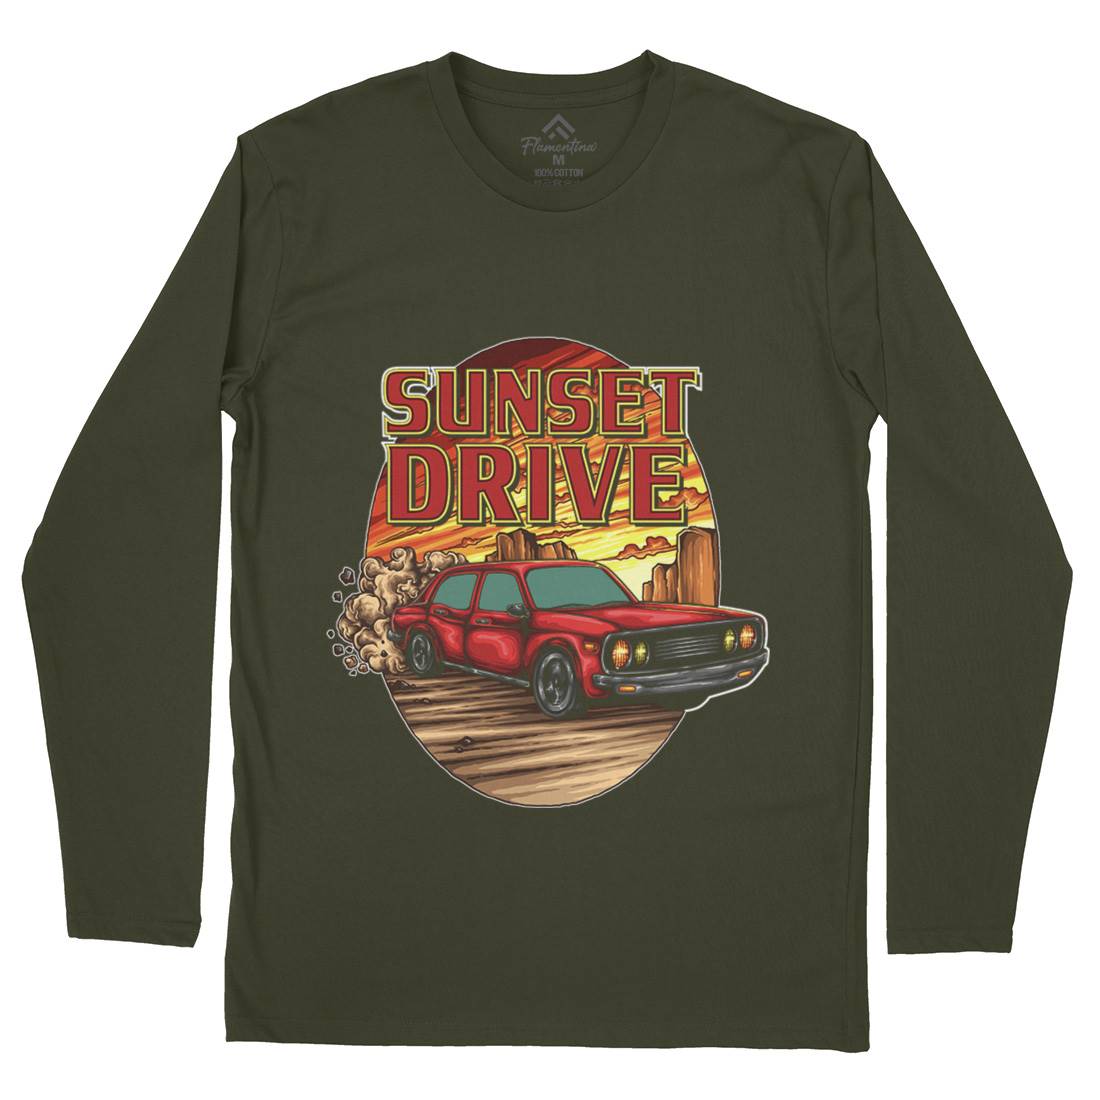 Sunset Drive Mens Long Sleeve T-Shirt Cars A472